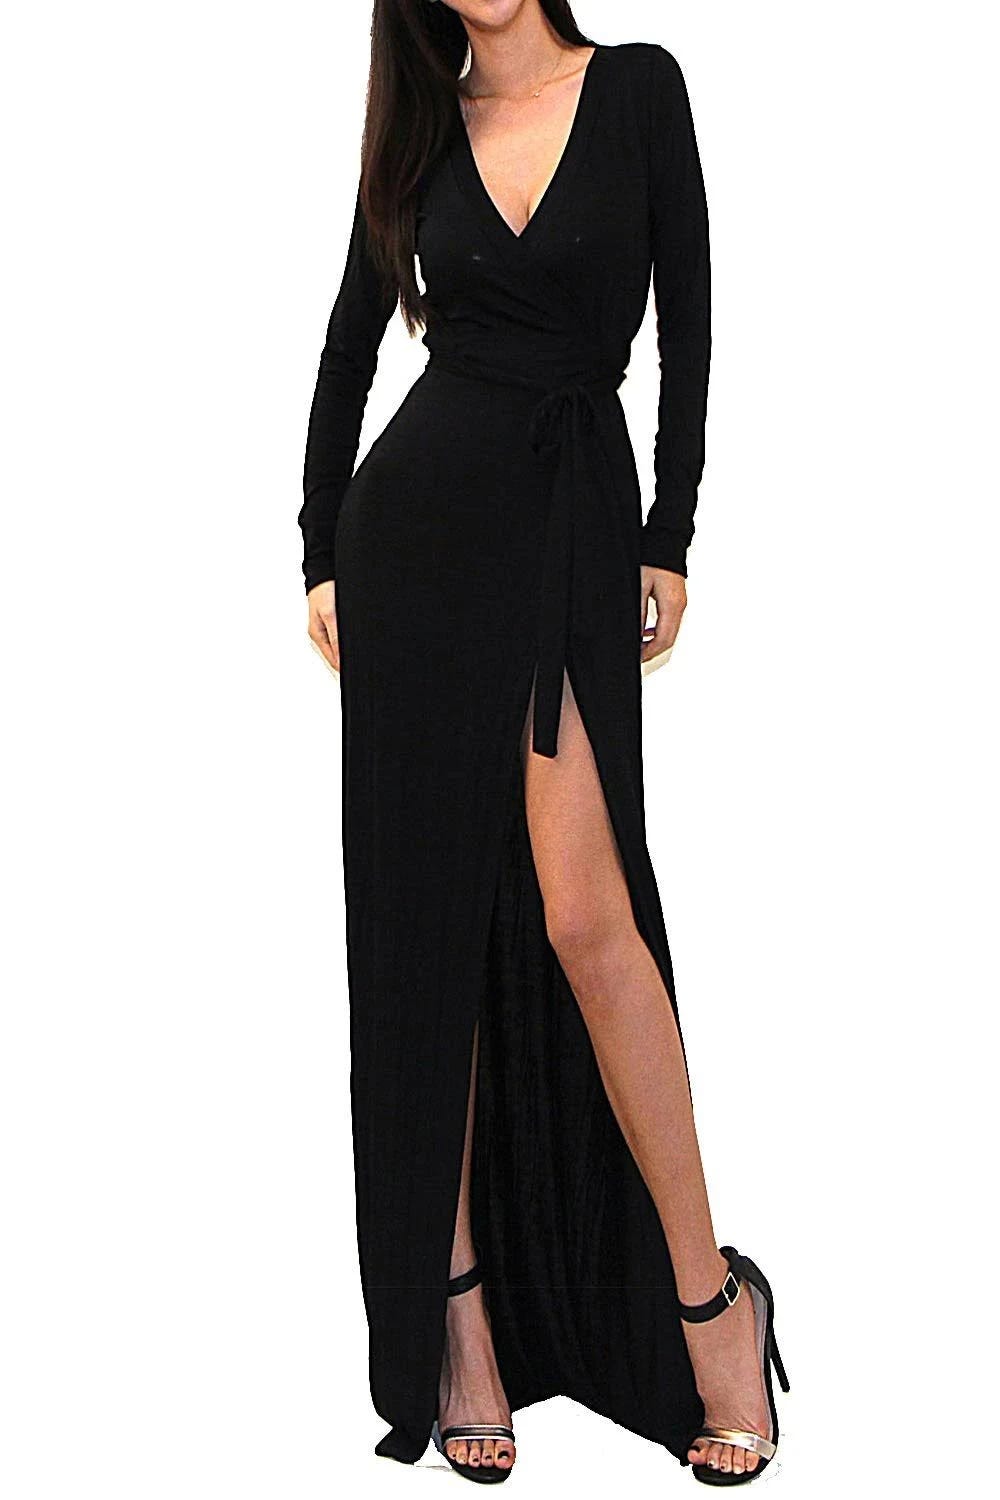 Elegant Black Slit Front Maxi Dress (Medium) | Image